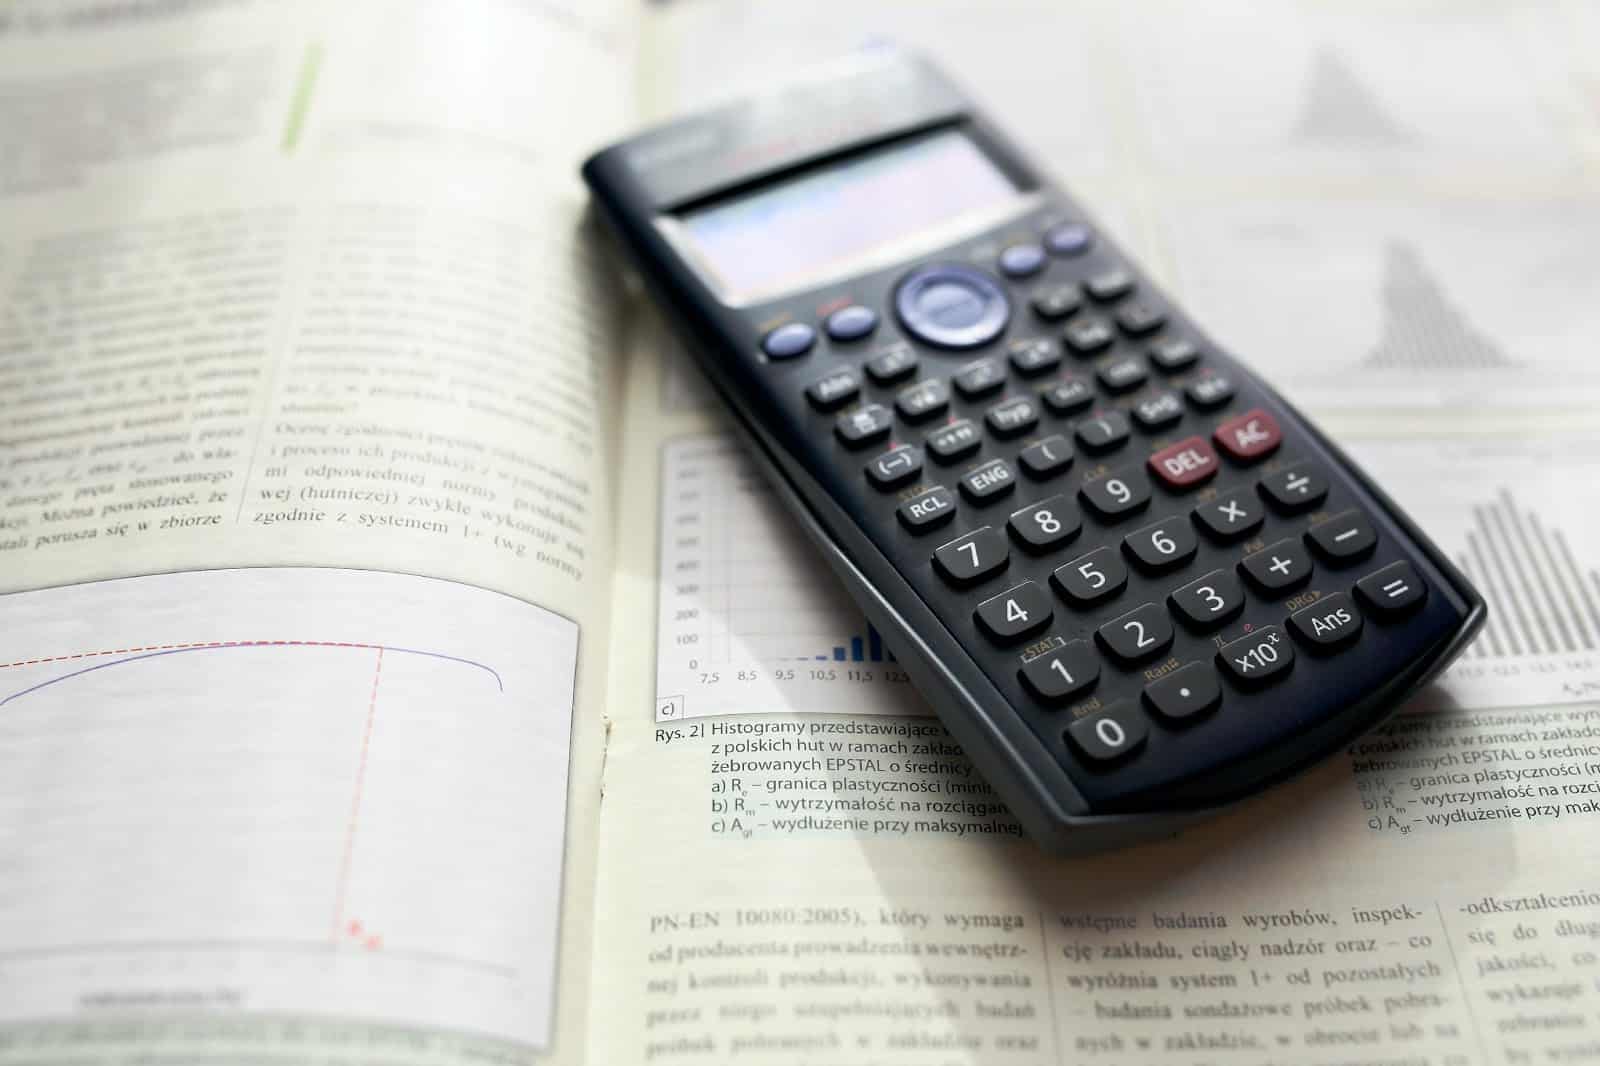 Calculator on a book